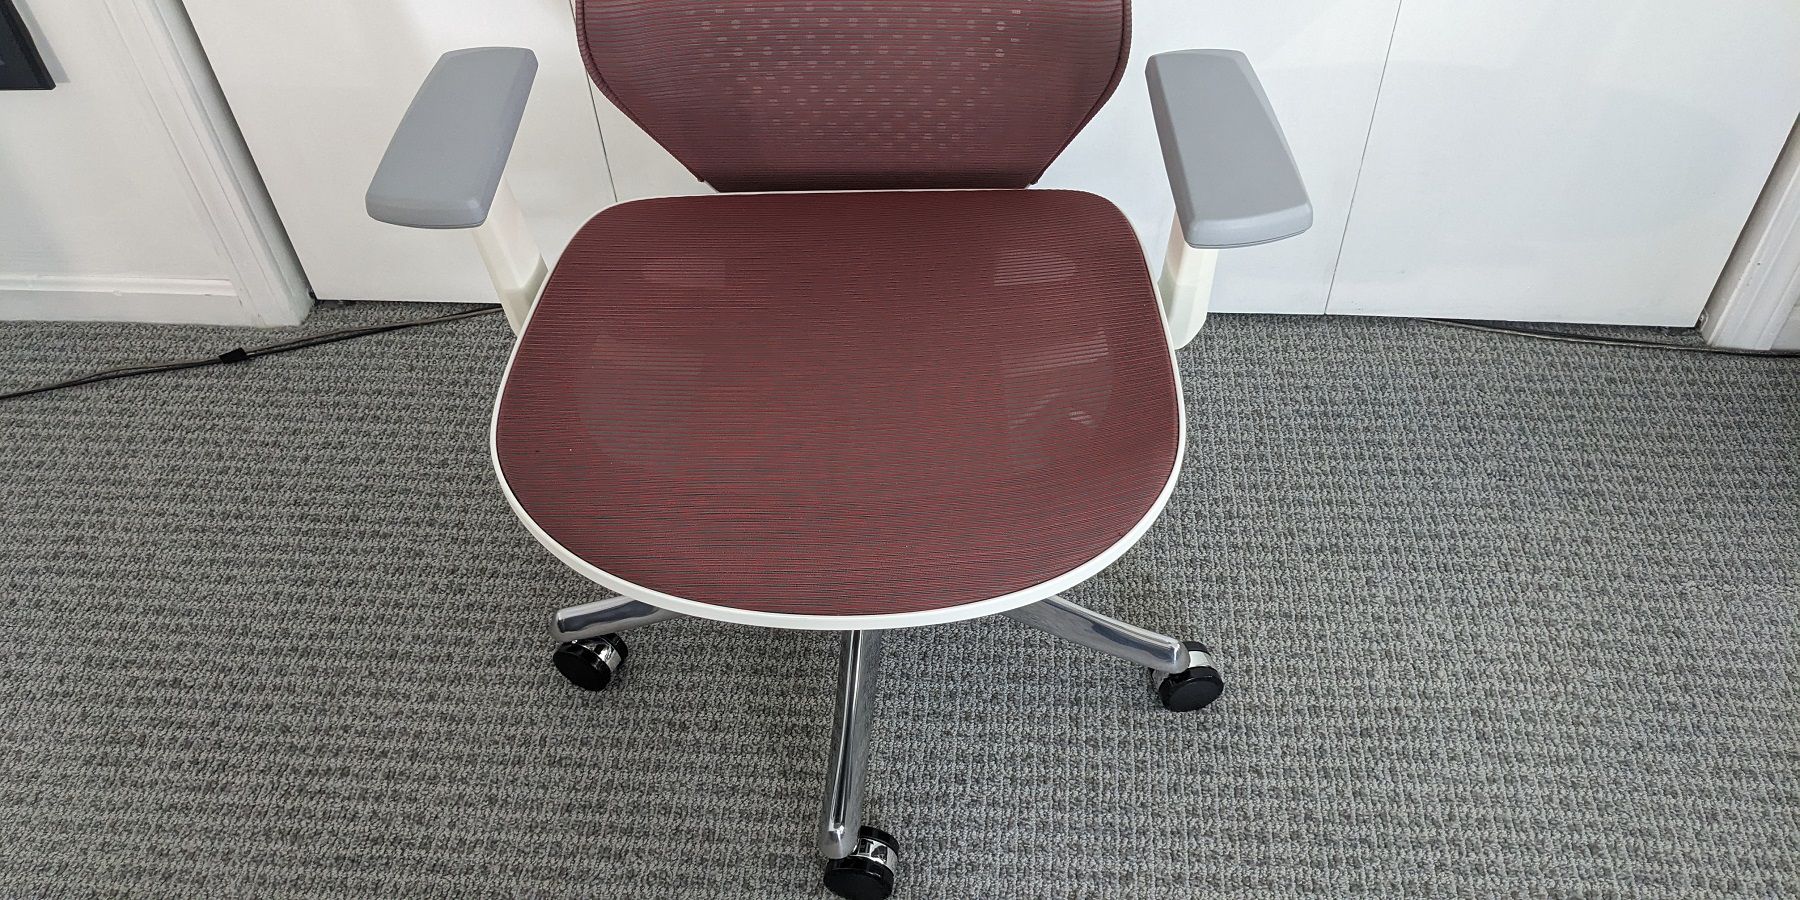 FlexiSpot Ergonomic Chair Pro Seat